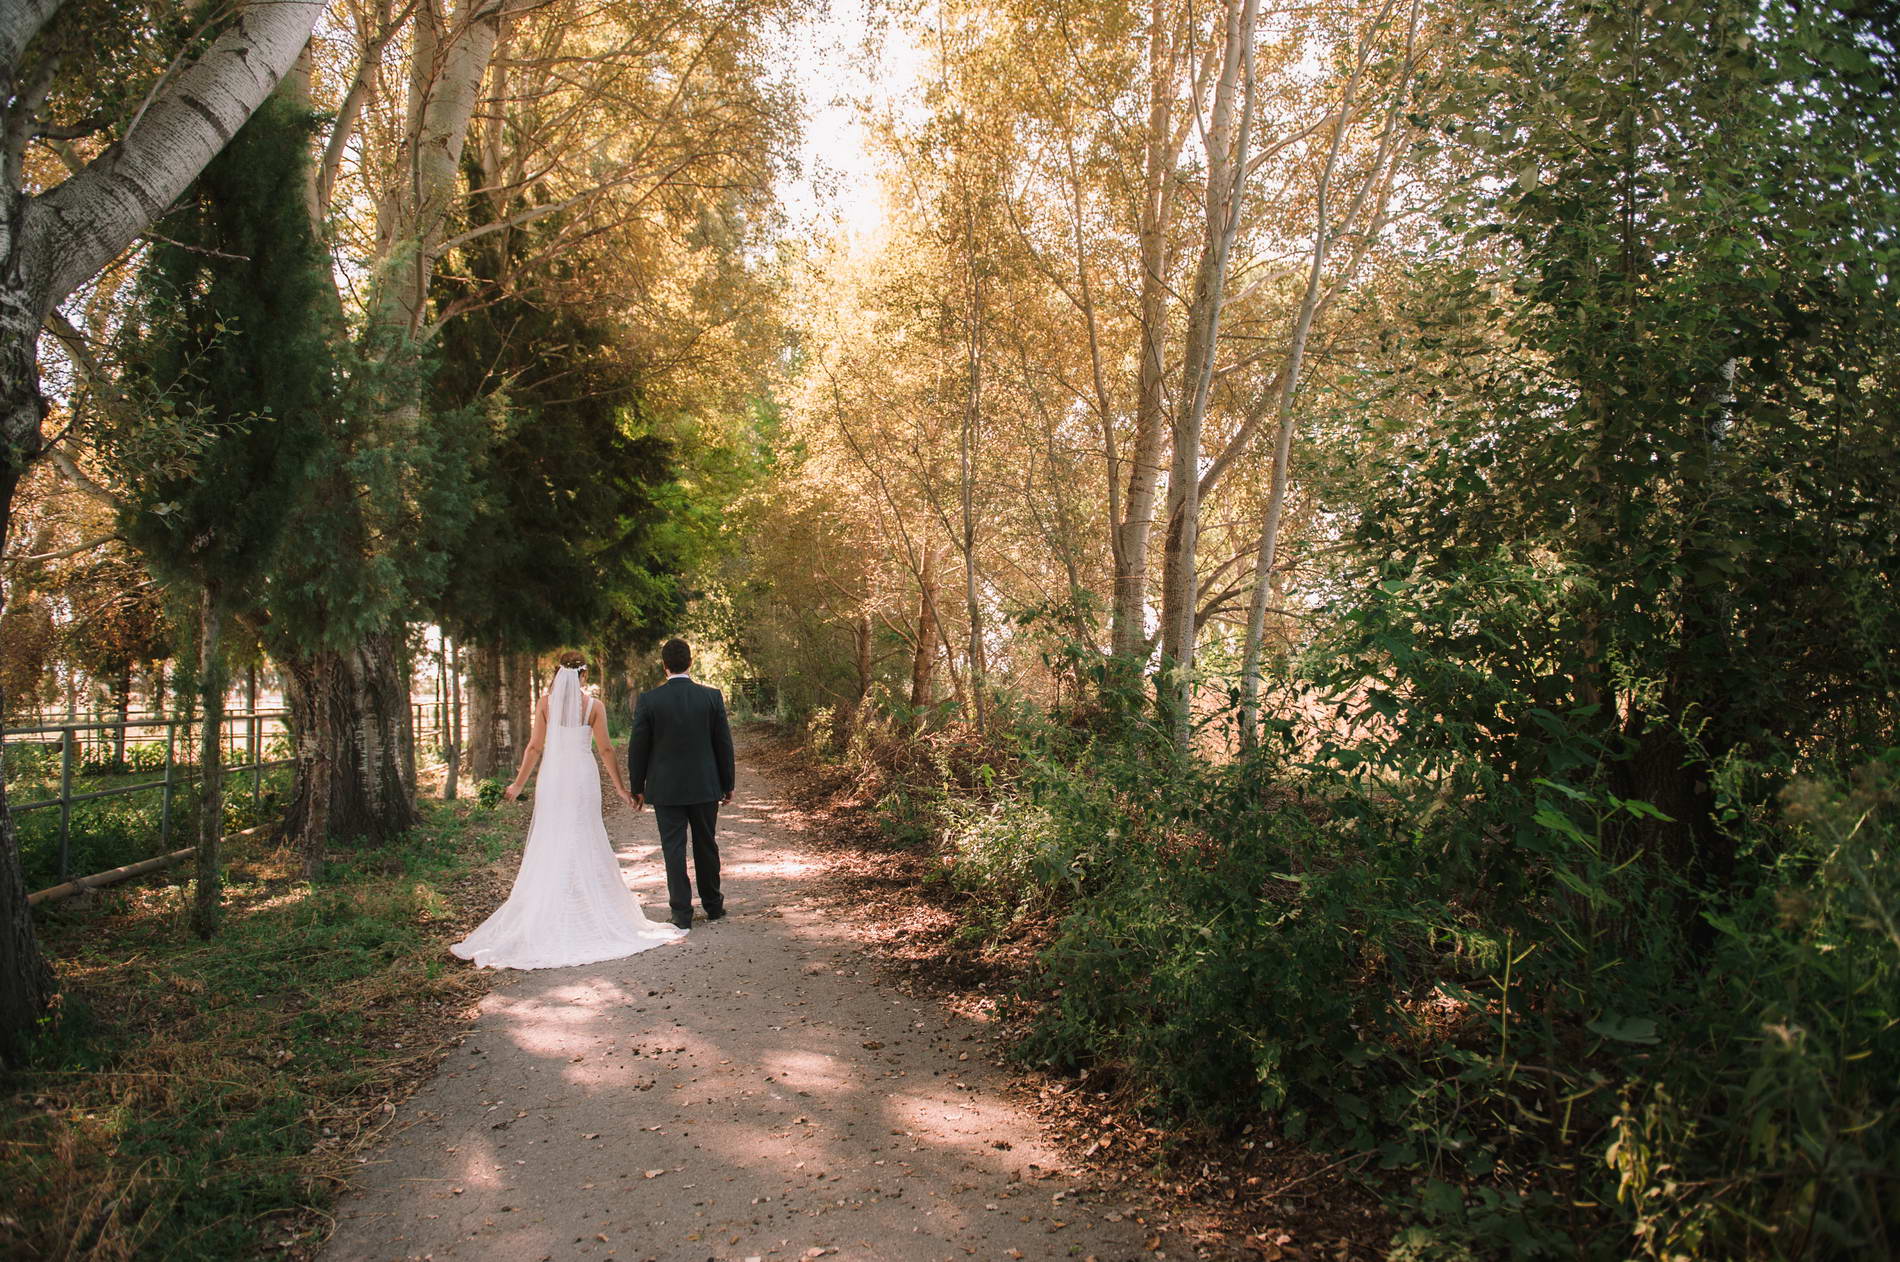 Next day φωτογράφηση γάμου στο δάσος